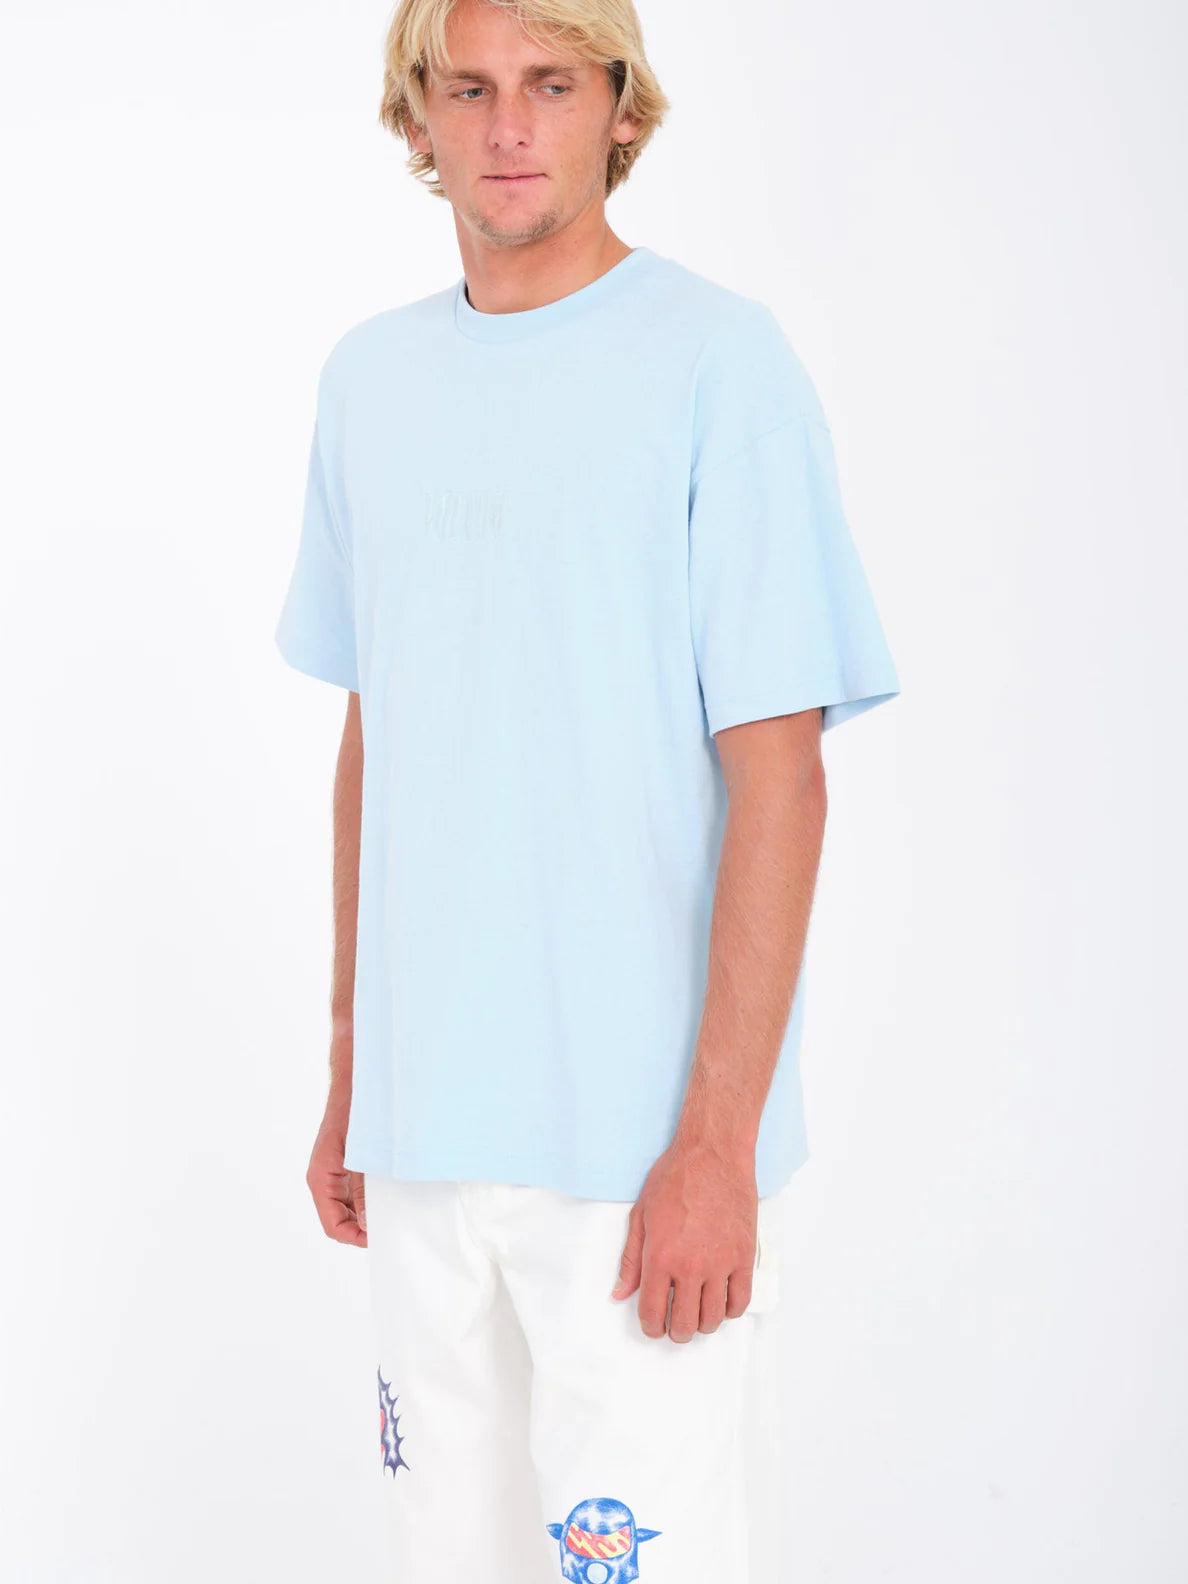 Camiseta Volcom Ripple Stone - Misty Blue | Camisetas de hombre | Camisetas manga corta de hombre | Volcom Shop | surfdevils.com